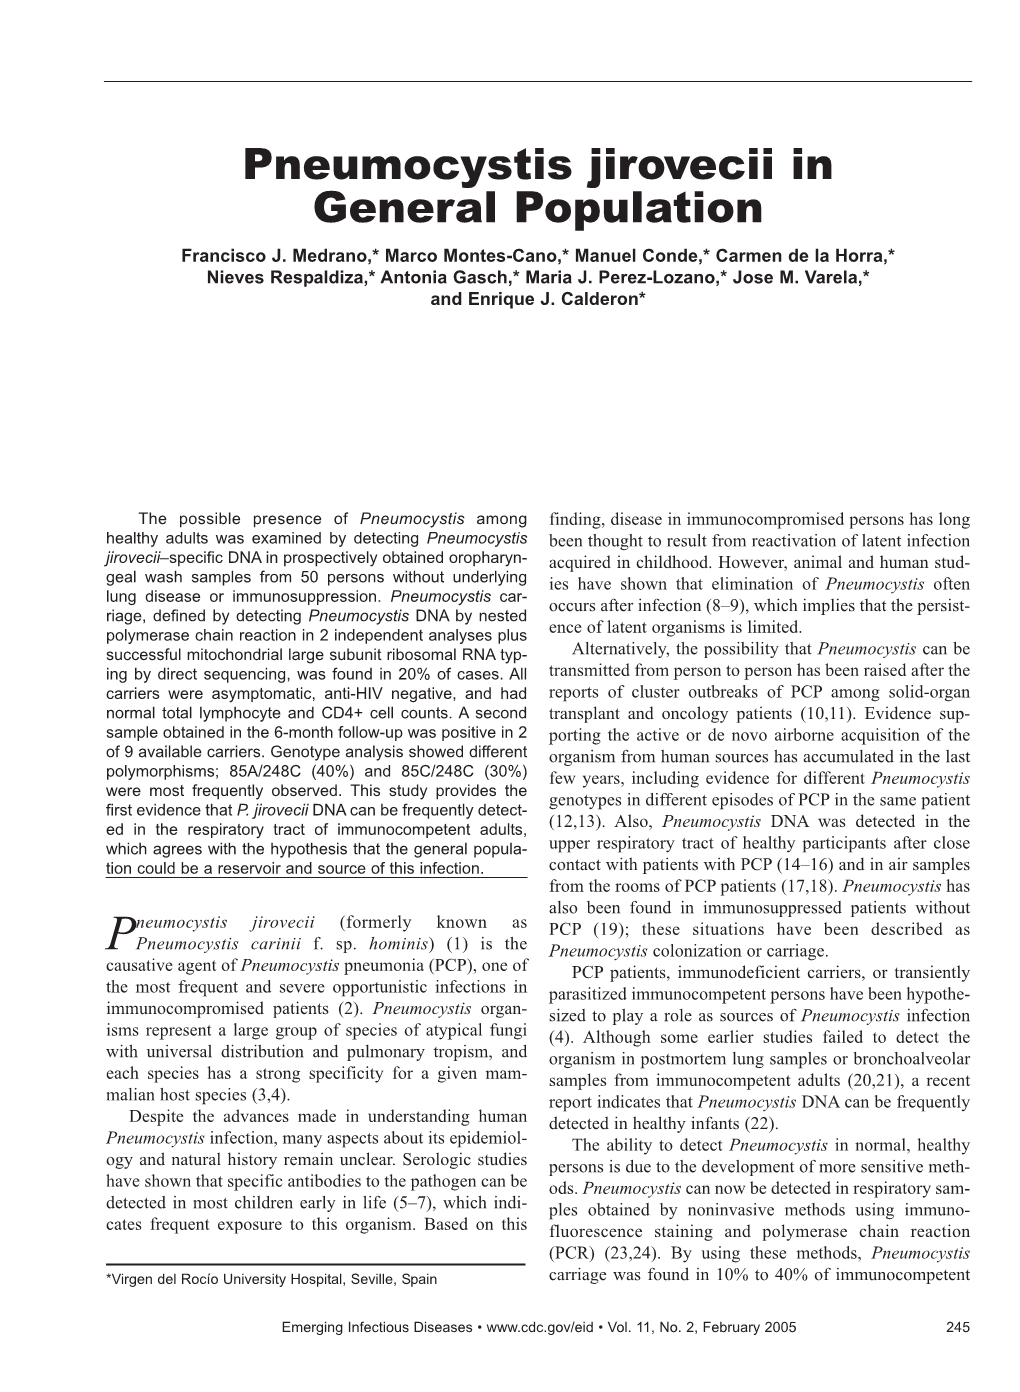 Pneumocystis Jirovecii in General Population Francisco J